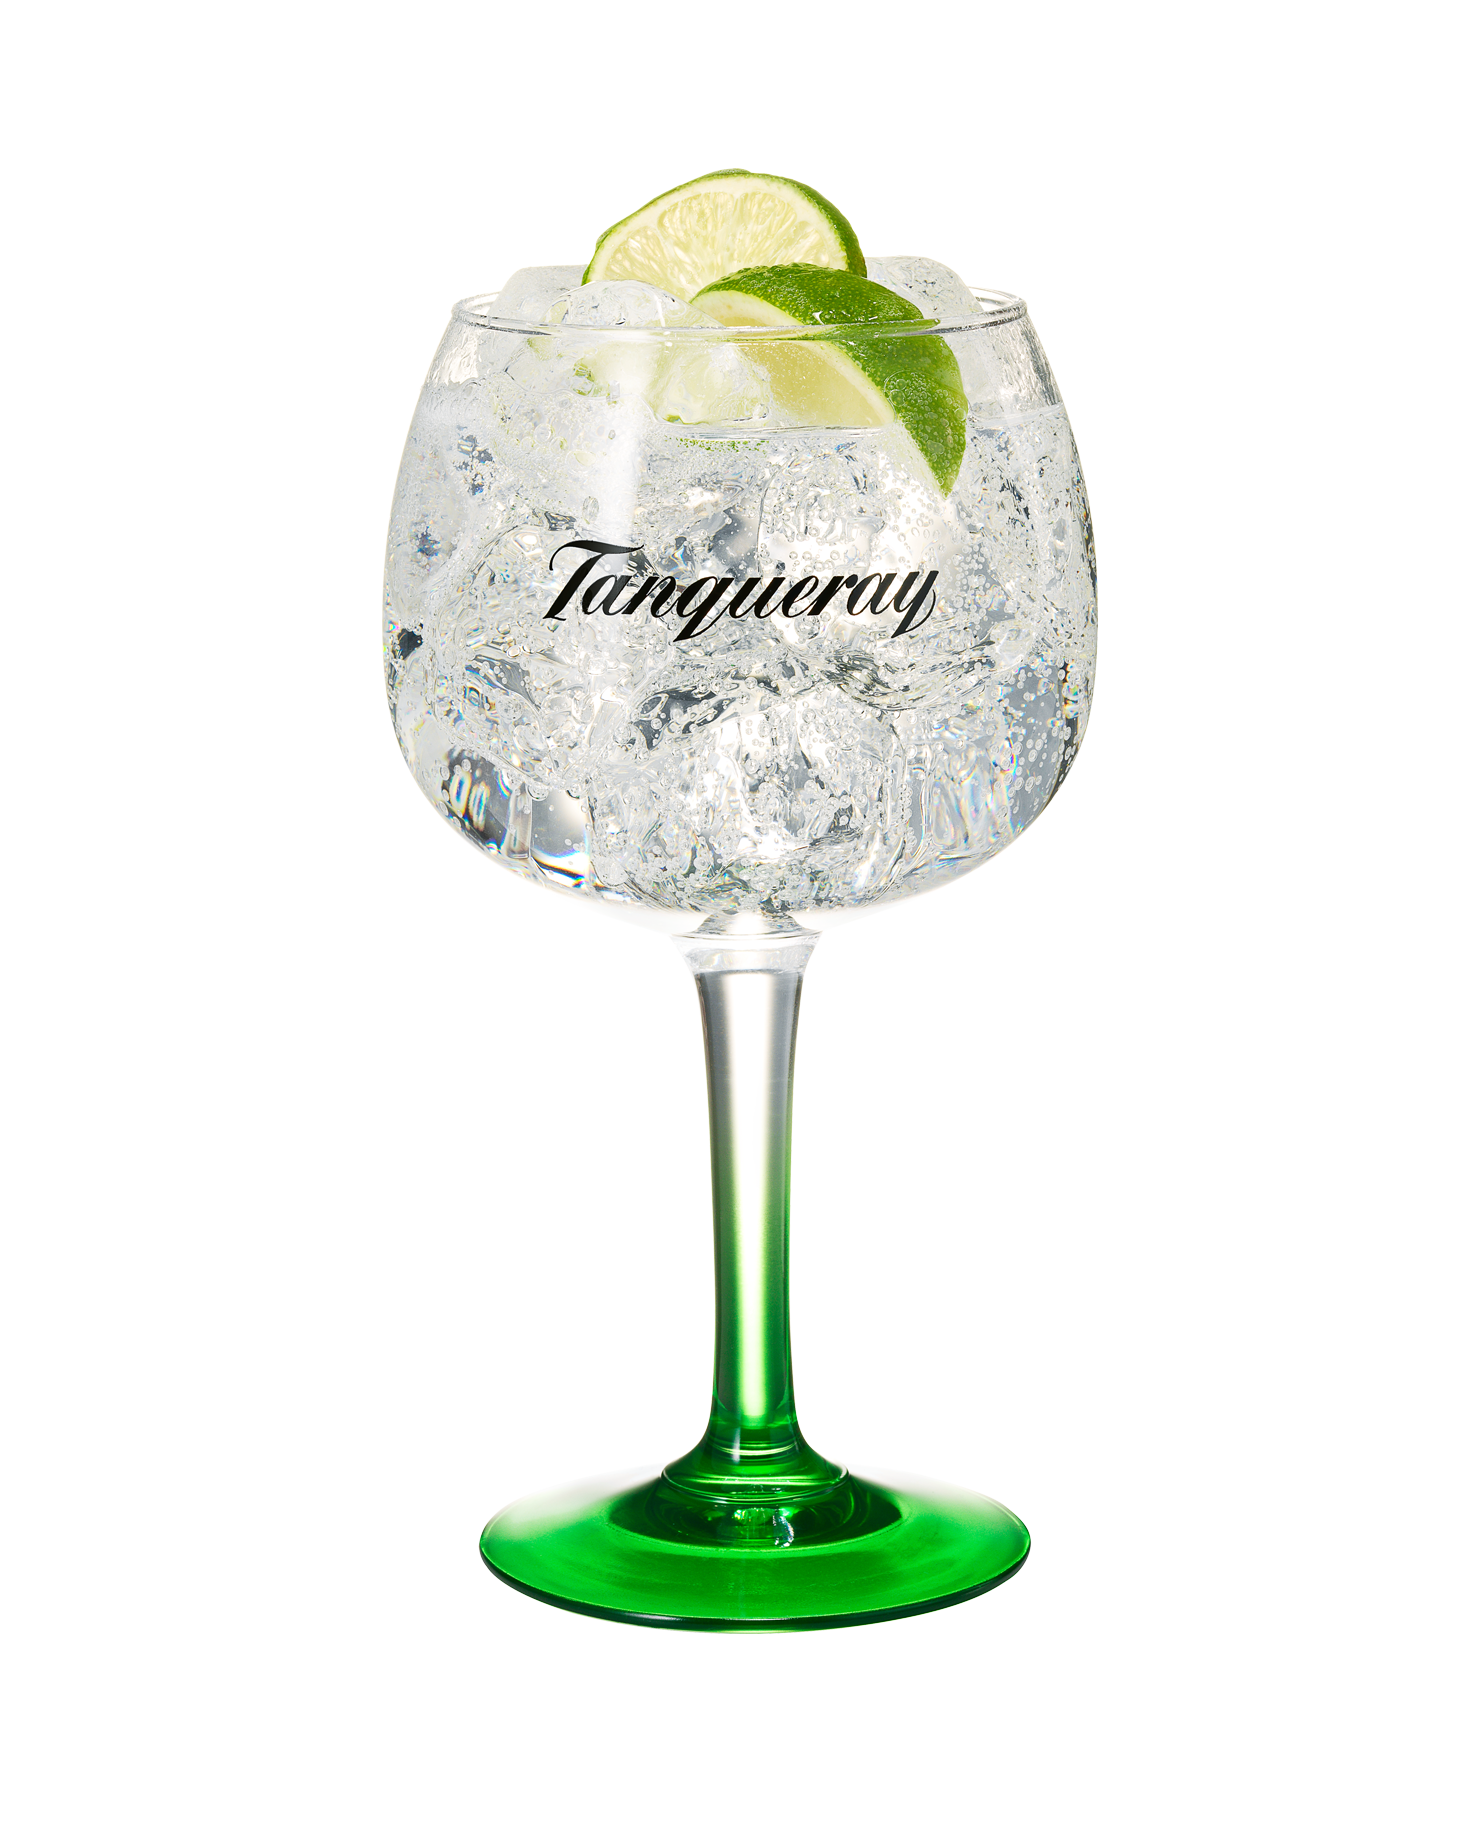 Bilde av Tanqueray Copa Gin Glass, 60cl (6 Glass)